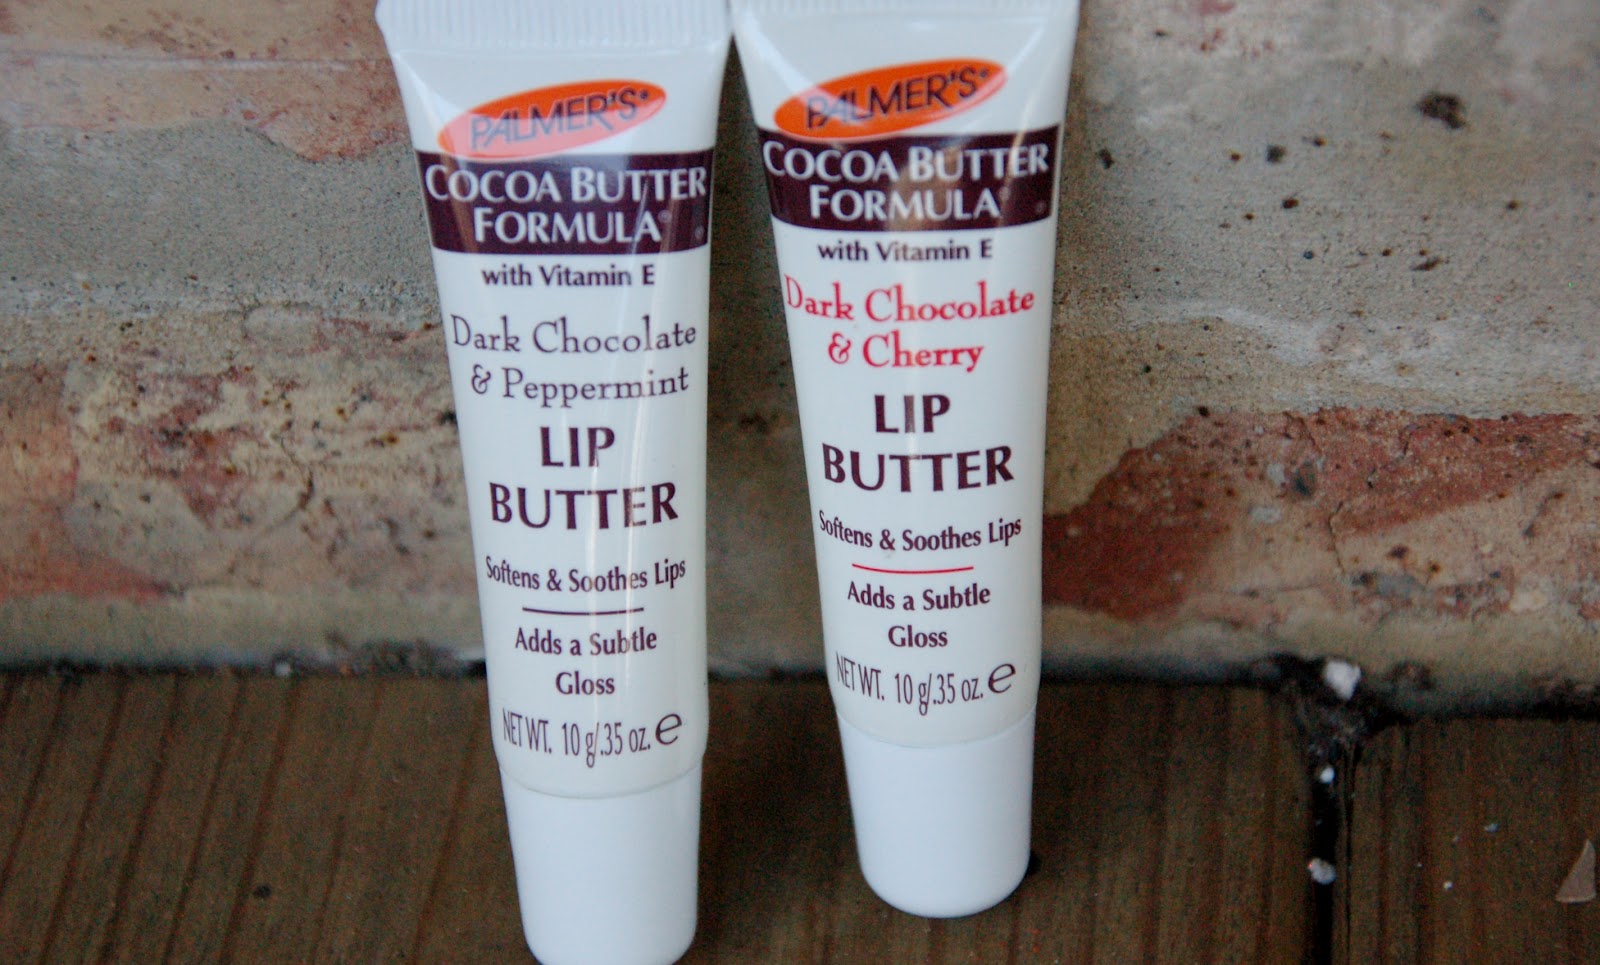 Palmer's Cocoa Butter Formula Dark Chocolate & Cherry Lip Butter